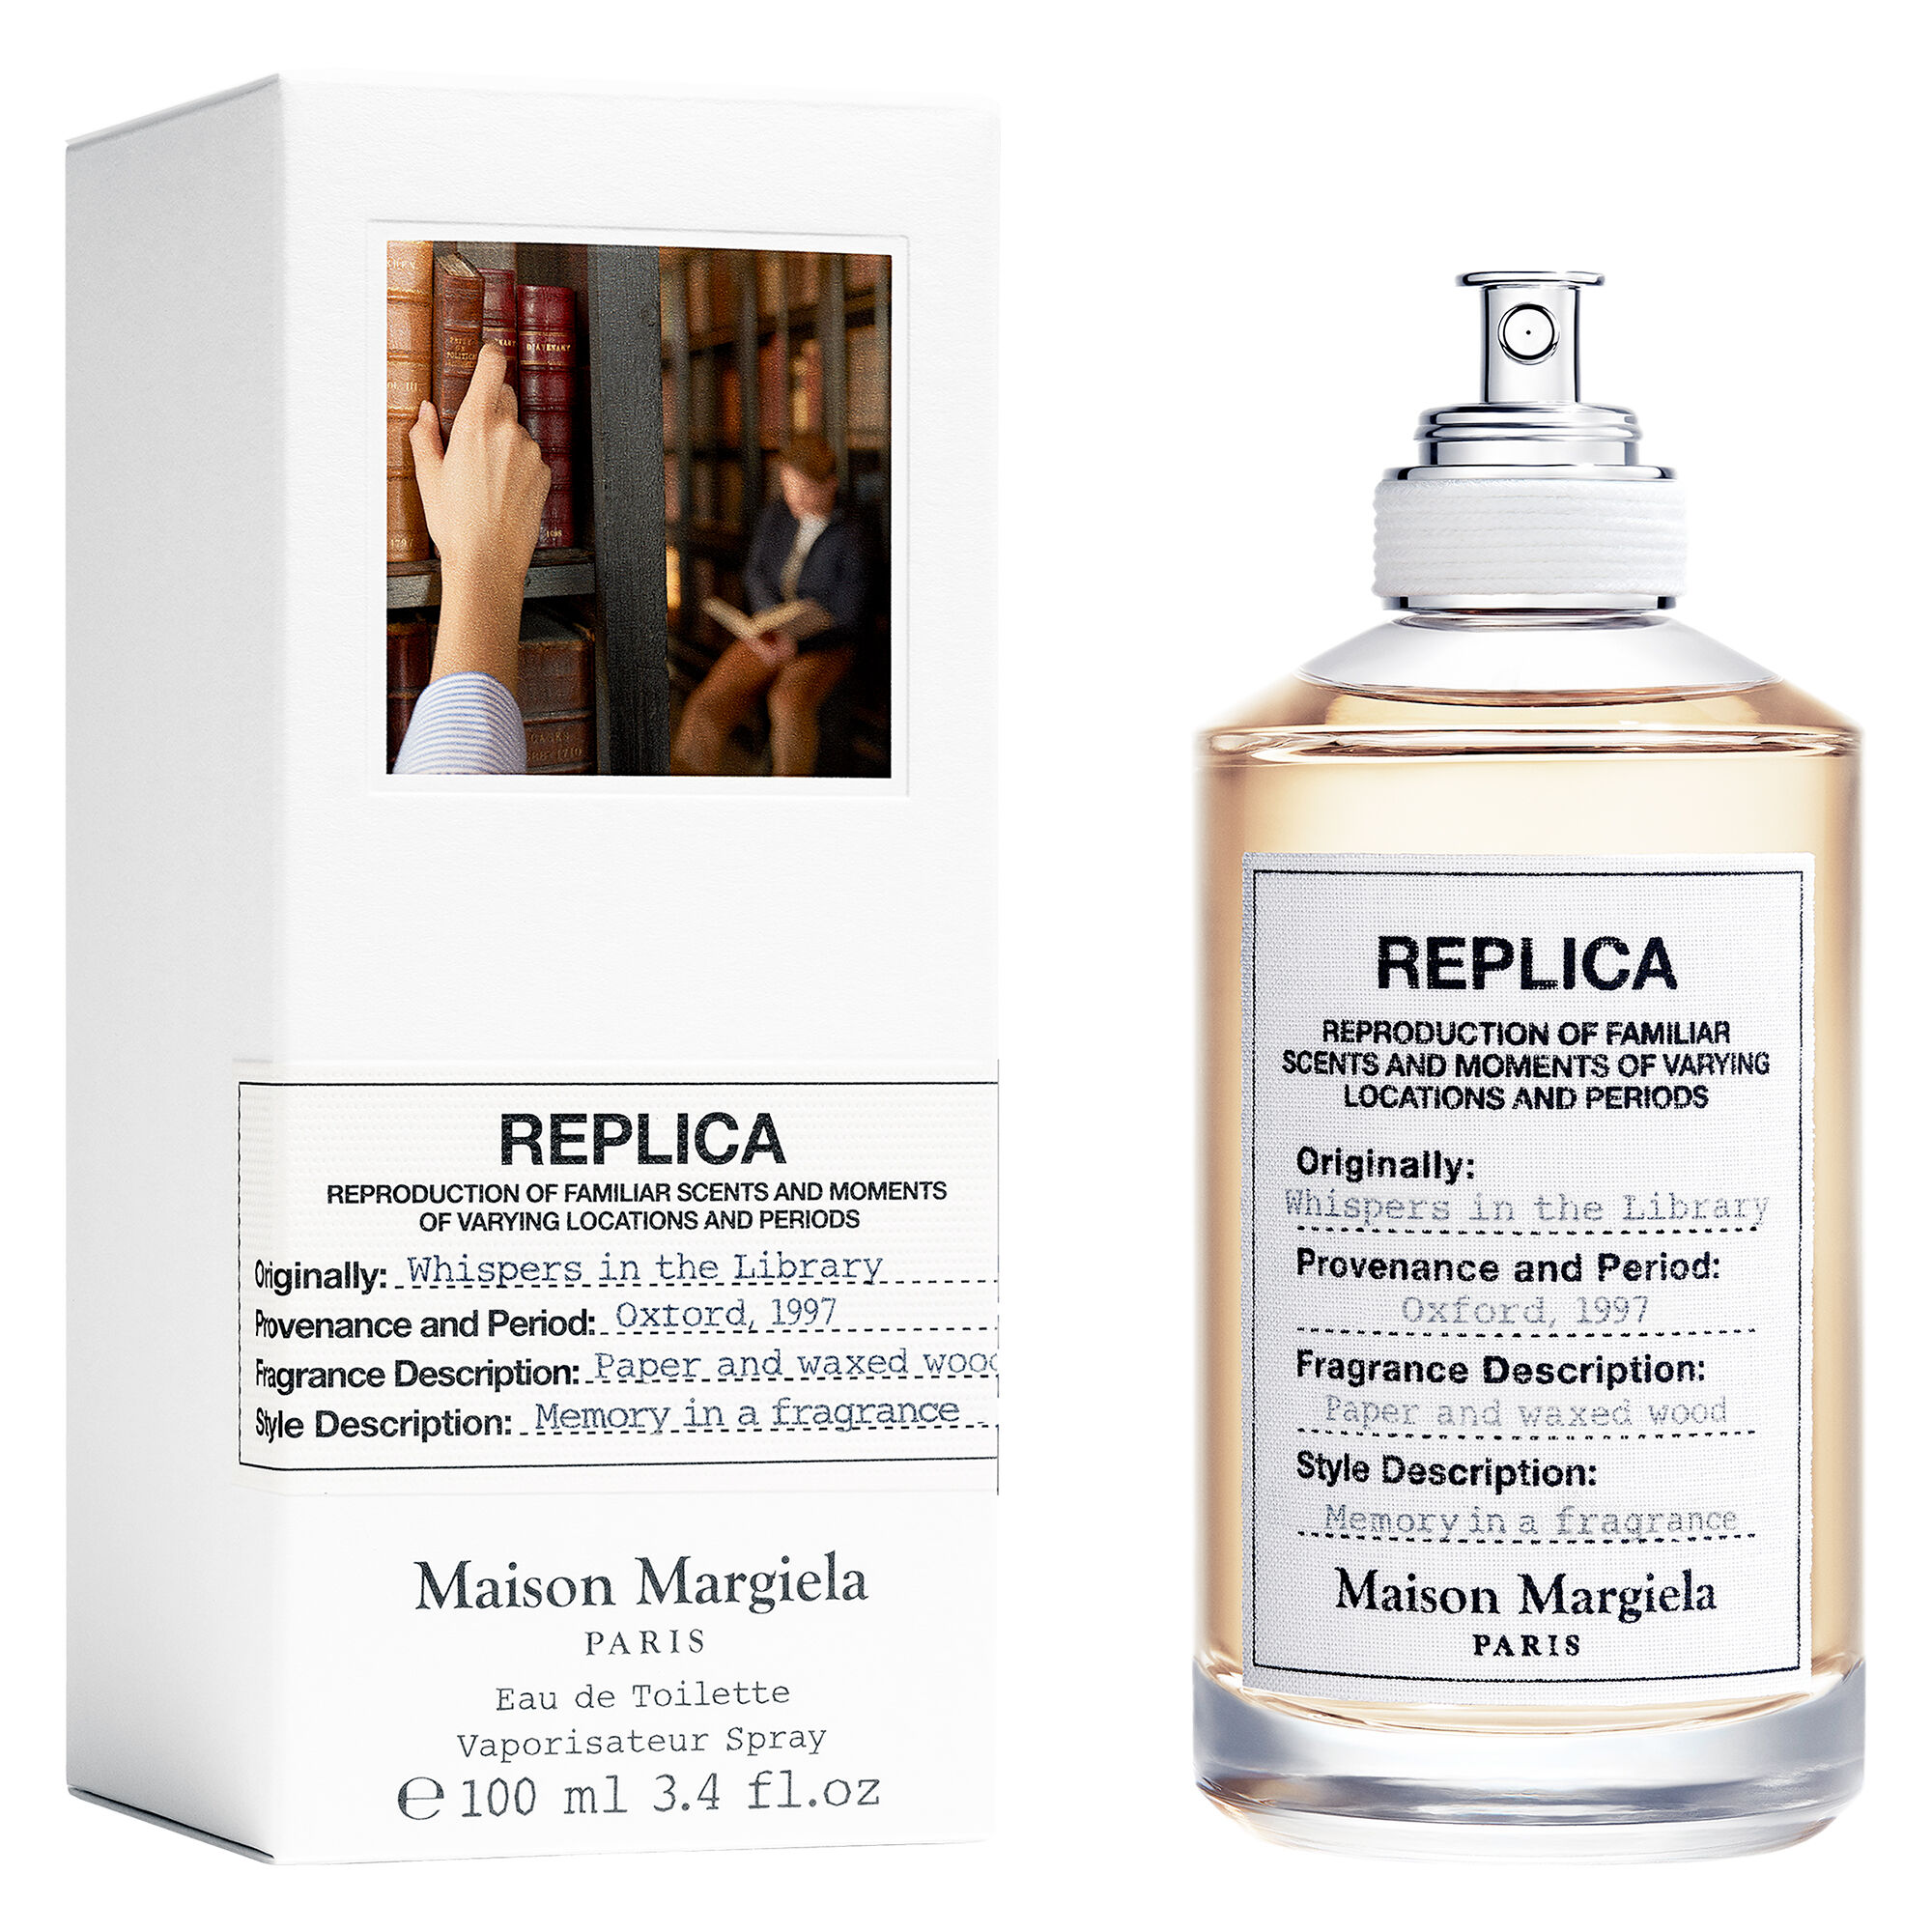 Replica Perfume Collection | Maison Margiela